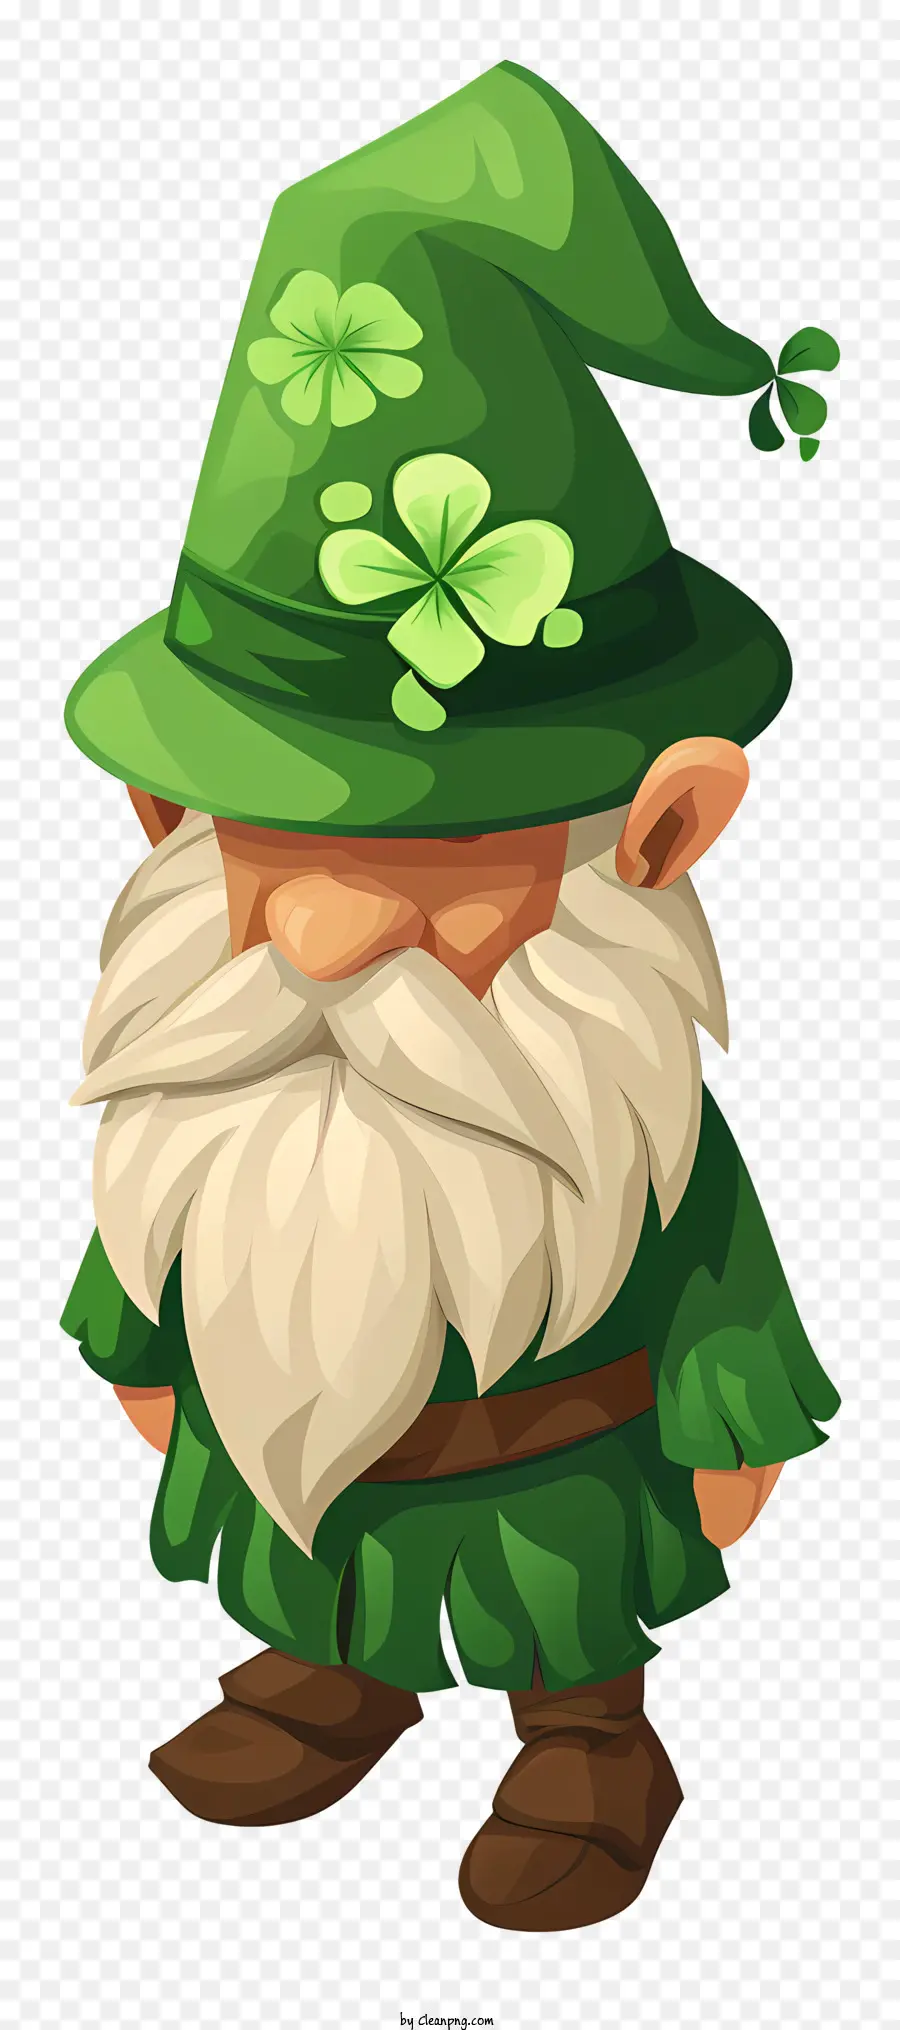 San Patrick's Day Gnome Cartoon Gnome Green Outfit Clover Cappello Croses - Cartoon Gnome in outfit verde con trifoglio